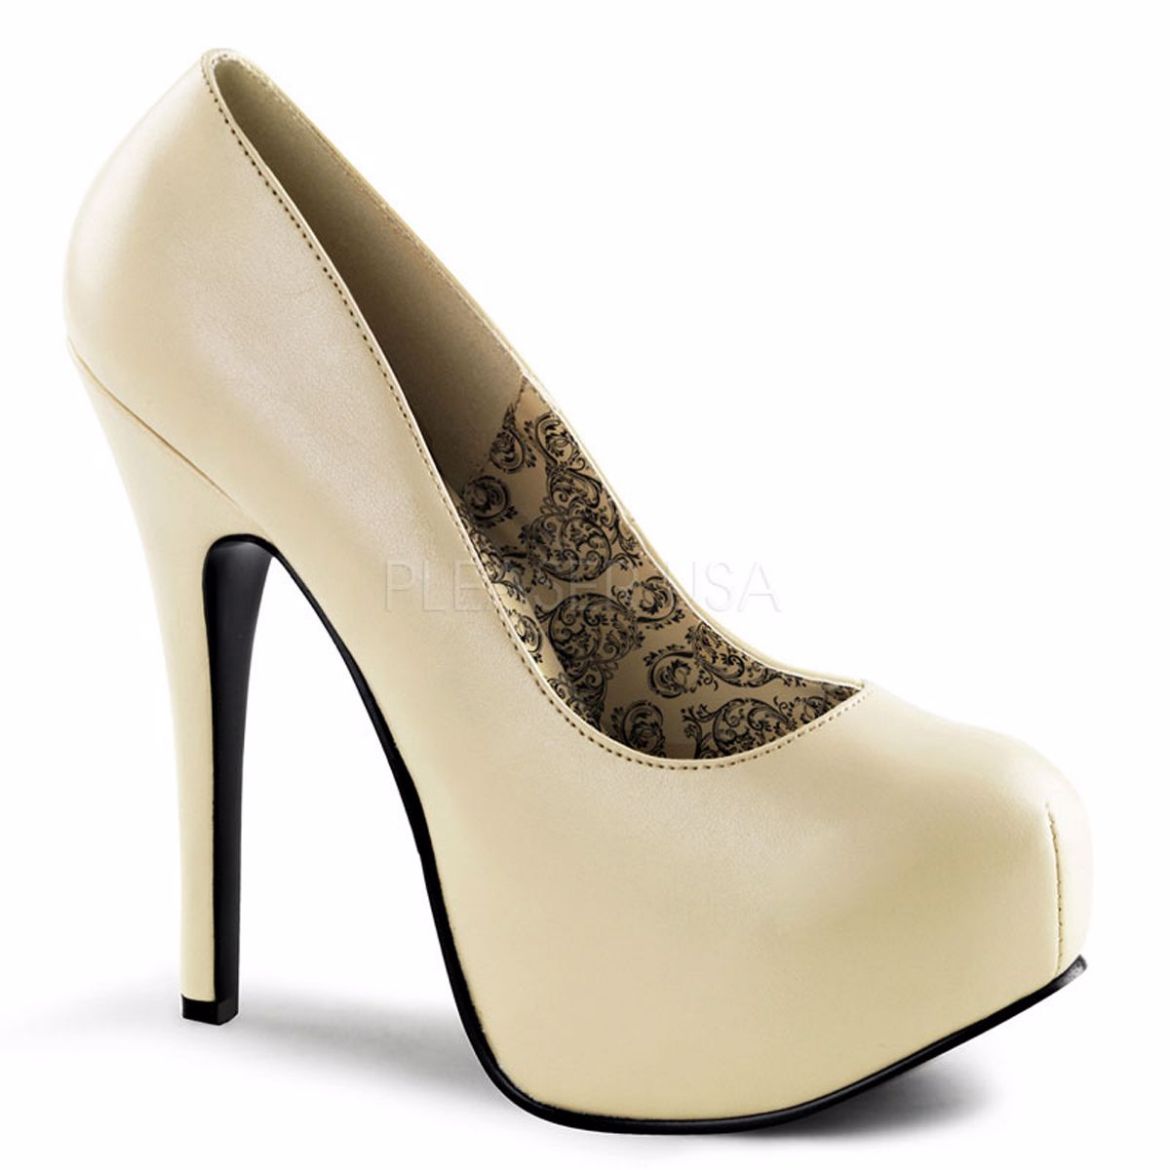 Product image of Bordello Teeze-06 Cream Pu, 5 3/4 inch (14.6 cm) Heel, 1 3/4 inch (4.4 cm) Platform Court Pump Shoes